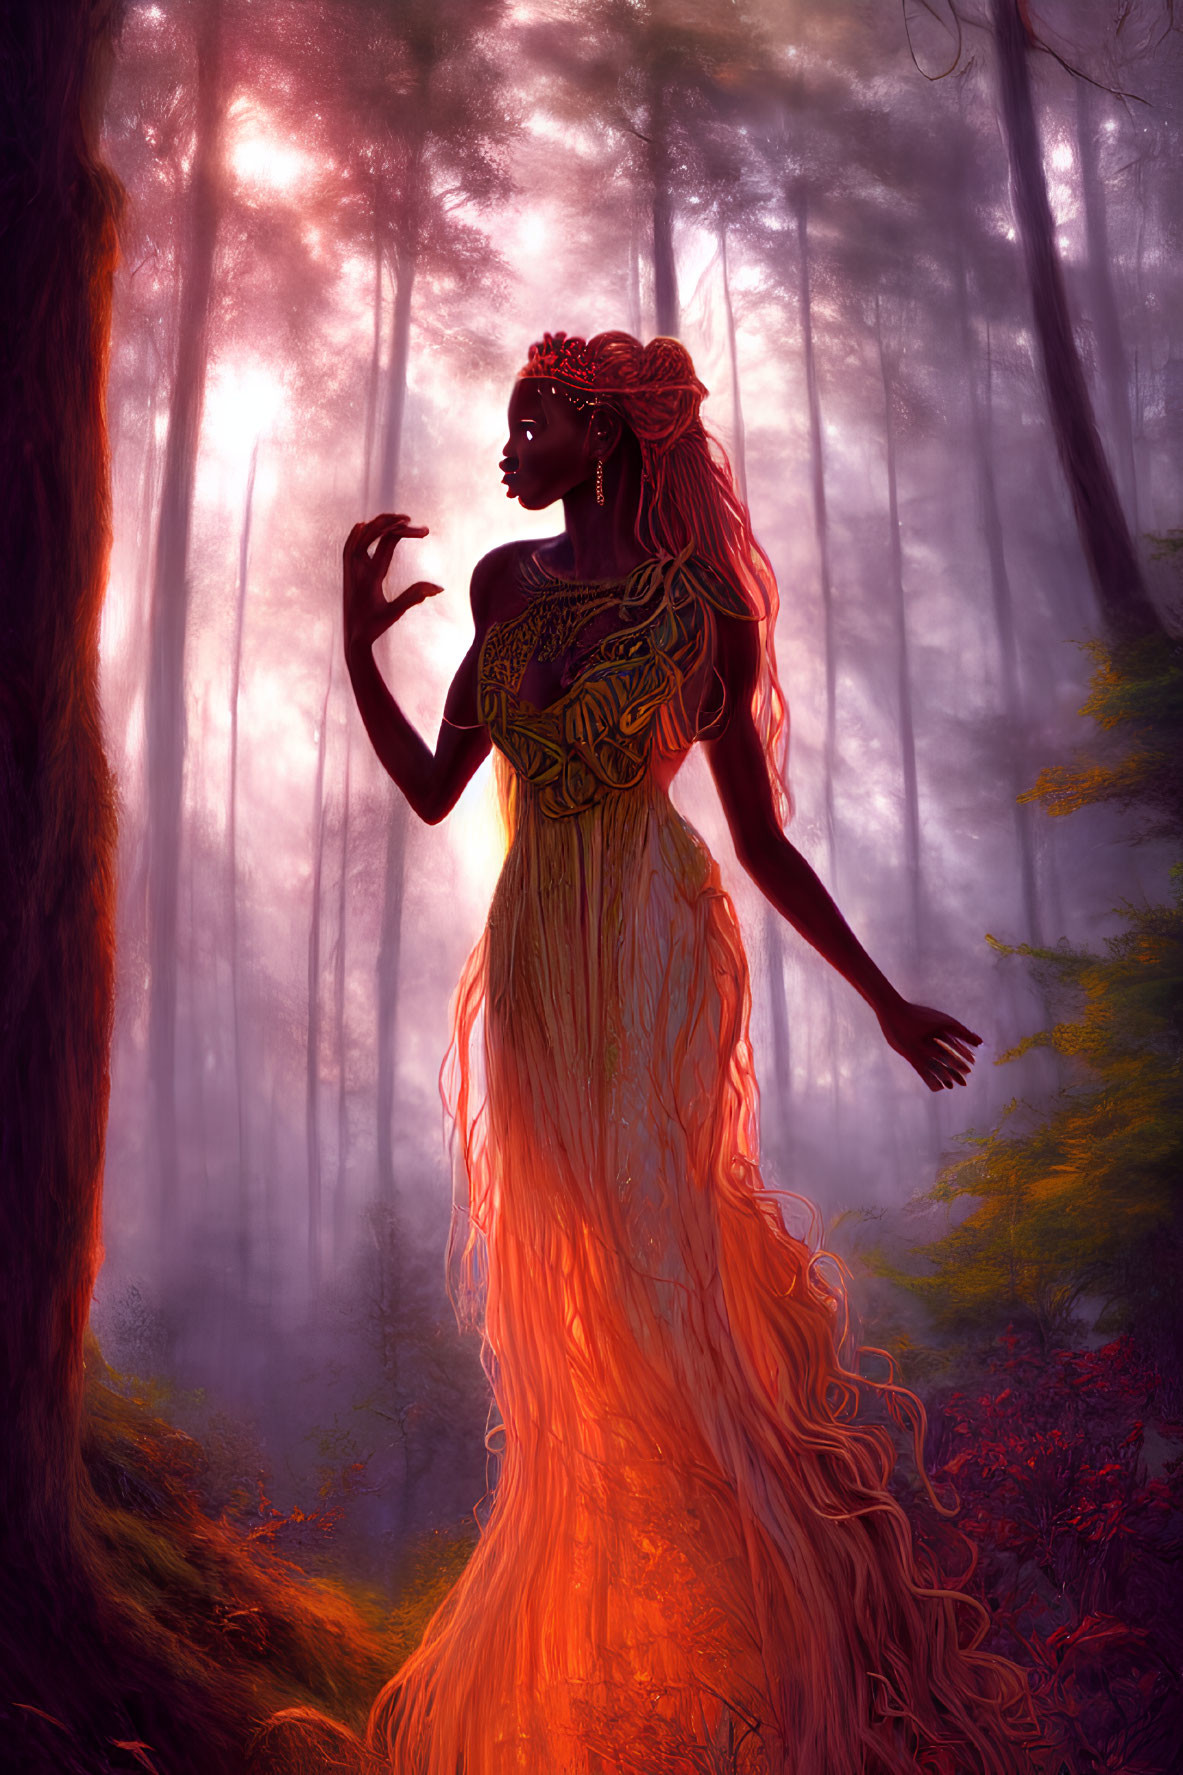 Intricate golden attire on elegant figure in mystical forest